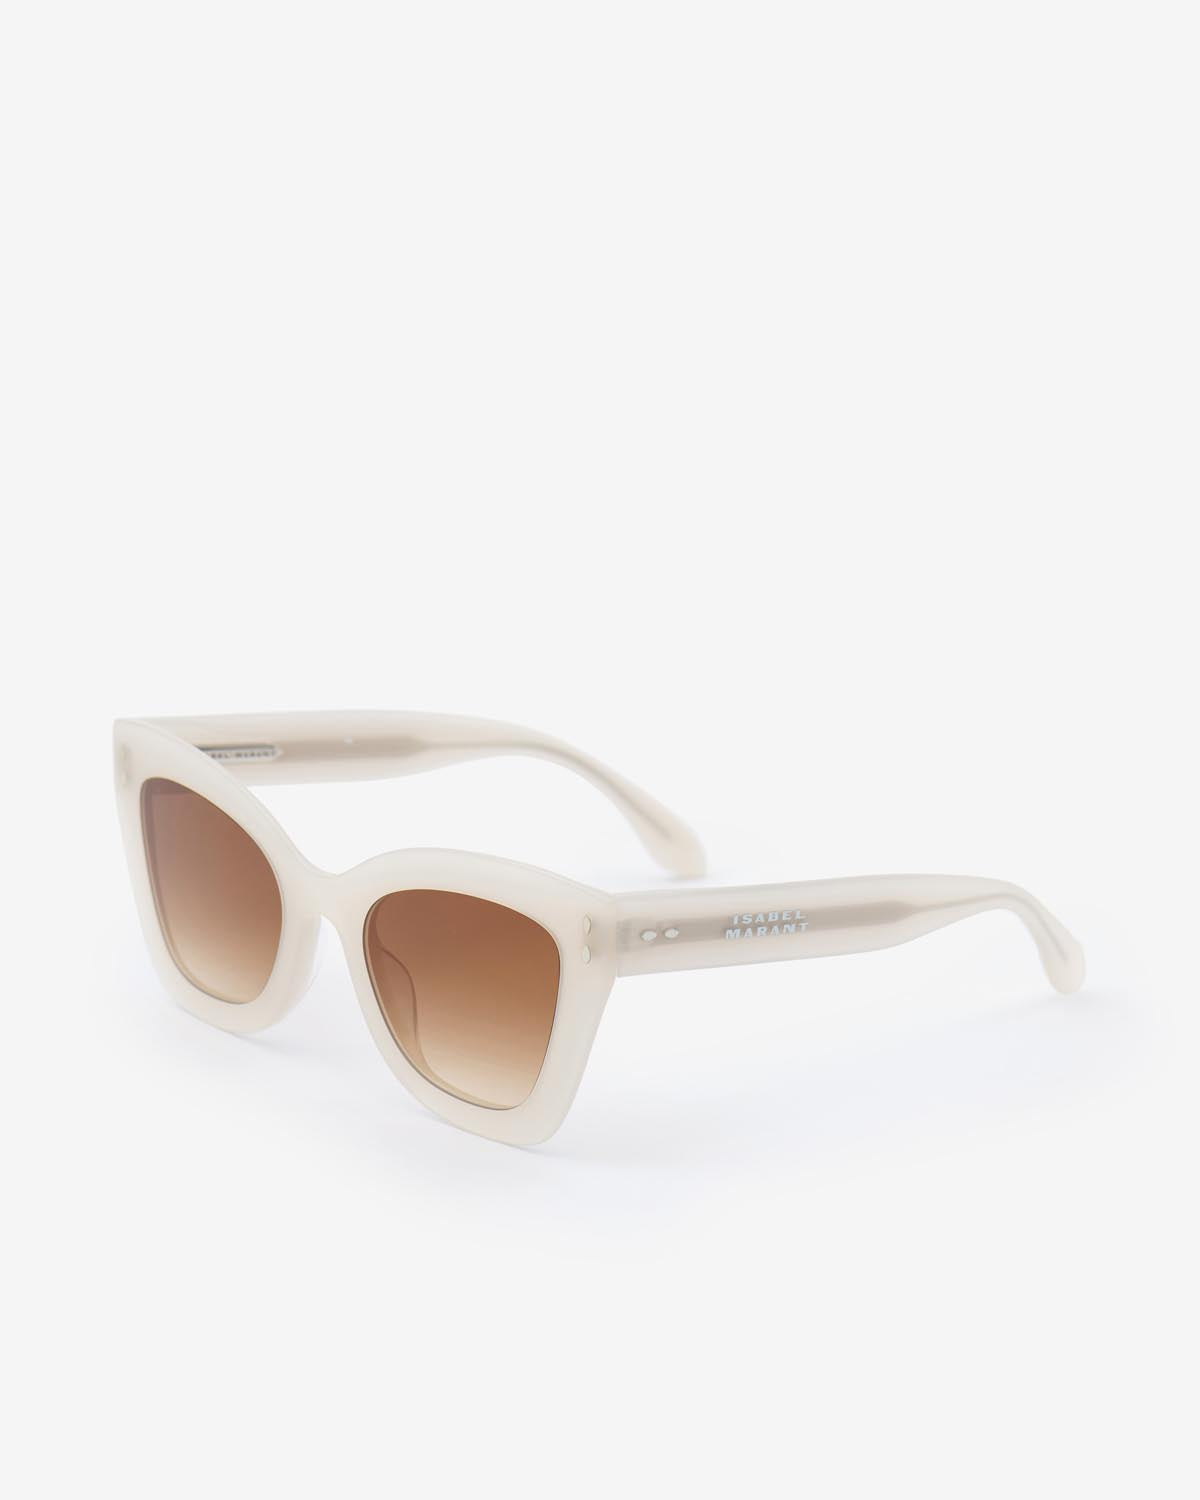 Louny sunglasses Woman Ivory-brown shaded 1